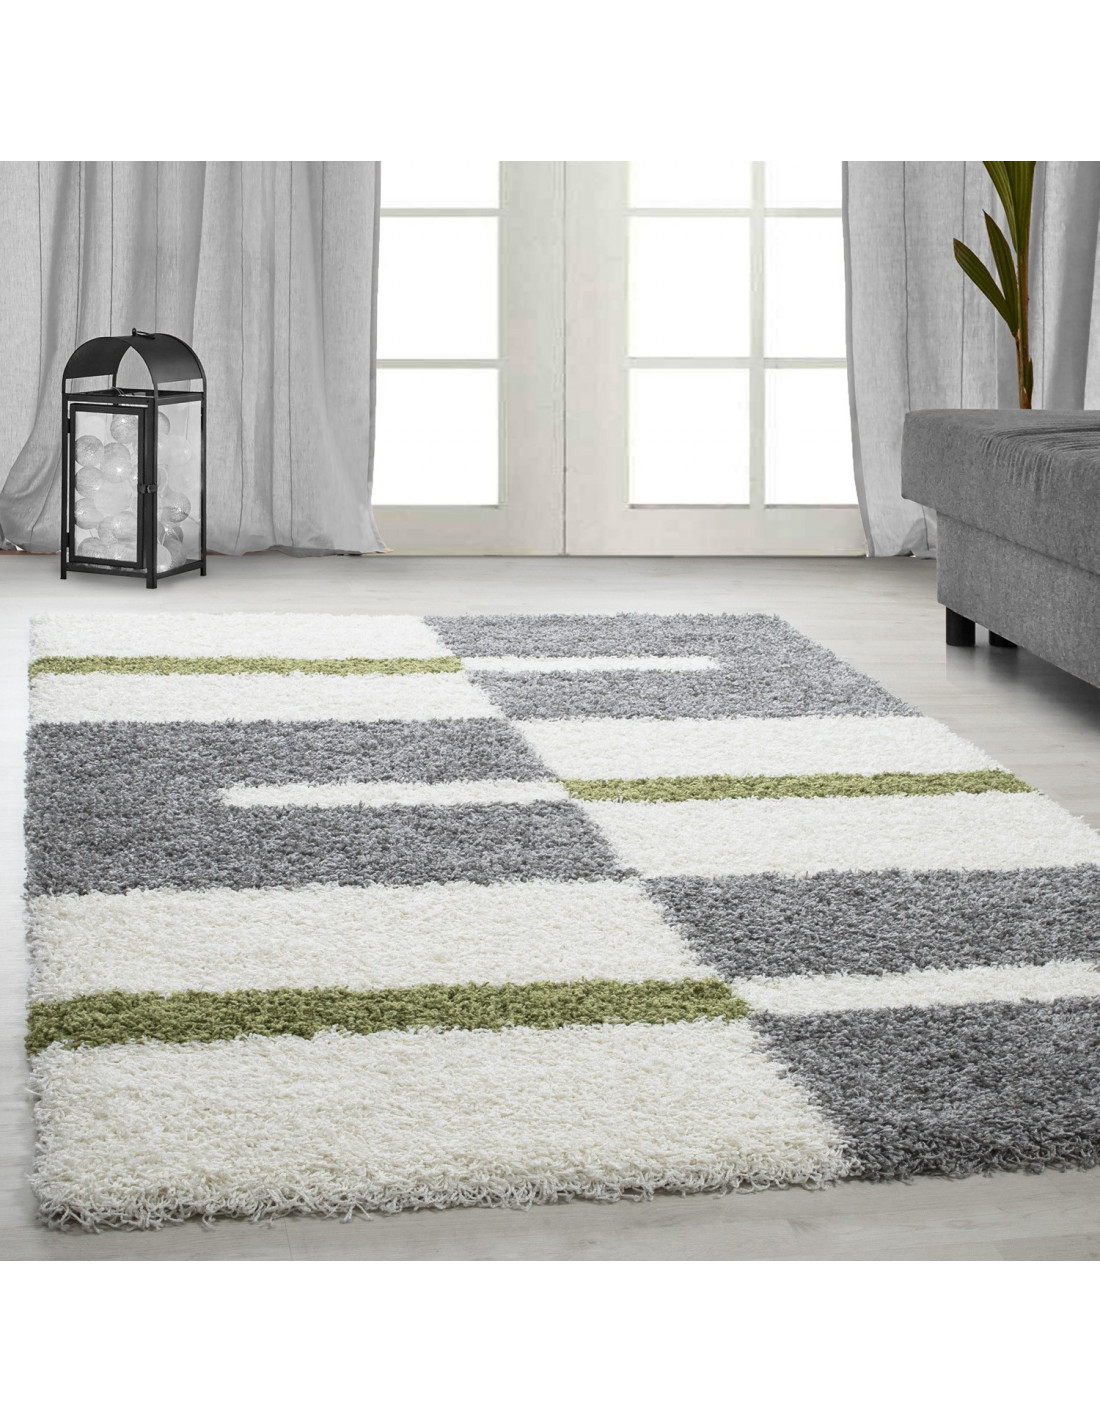 Shaggy carpet, pile height 3cm, gray-white-green